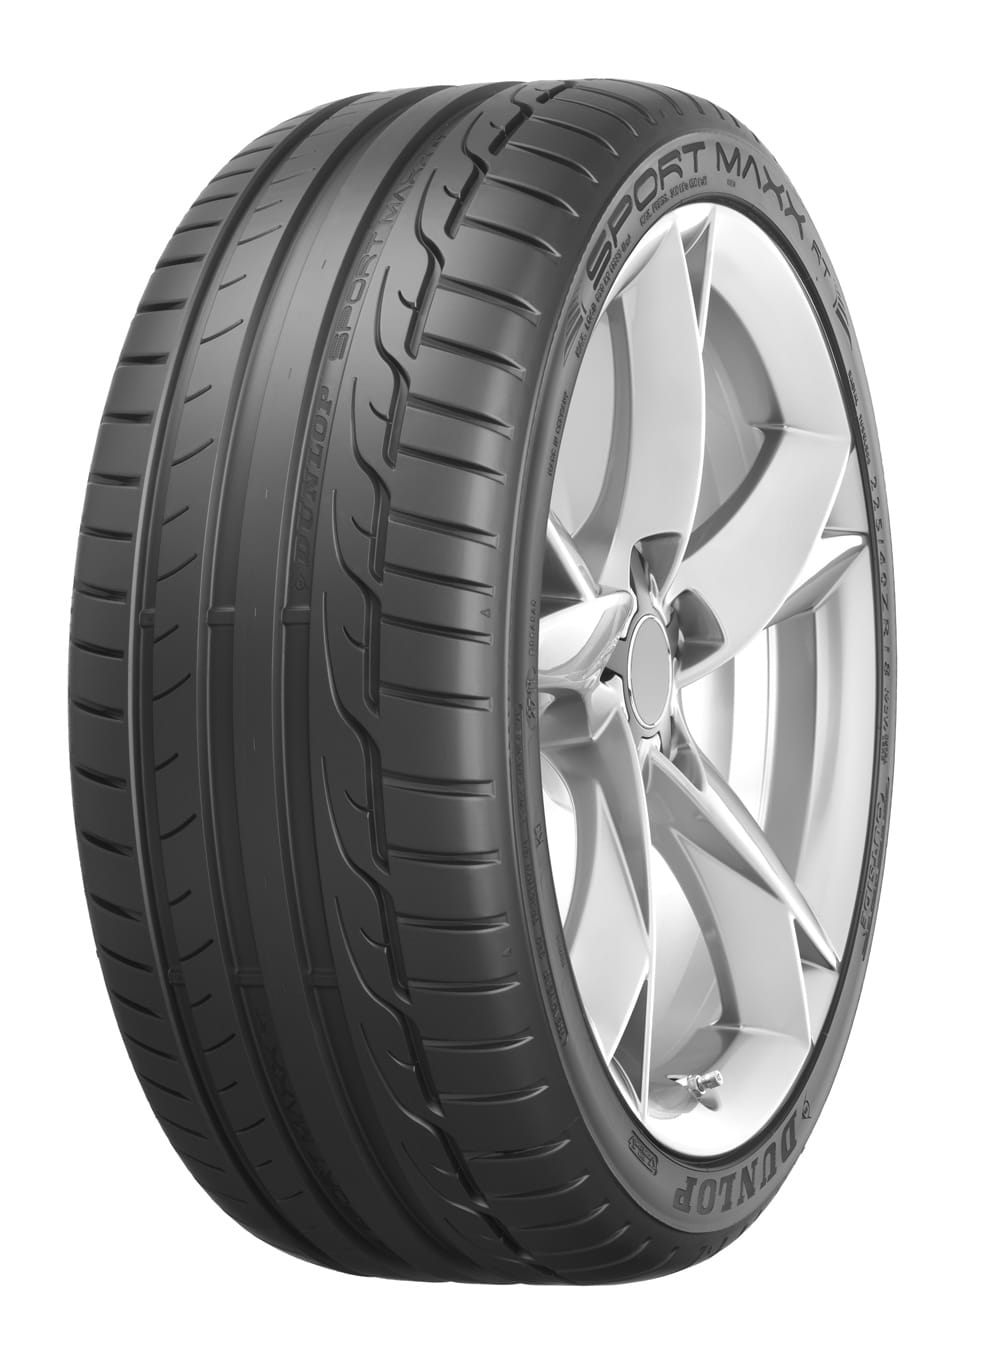 Gomme Nuove Dunlop 225/40 R18 92Y SP.MAXX RT MO pneumatici nuovi Estivo